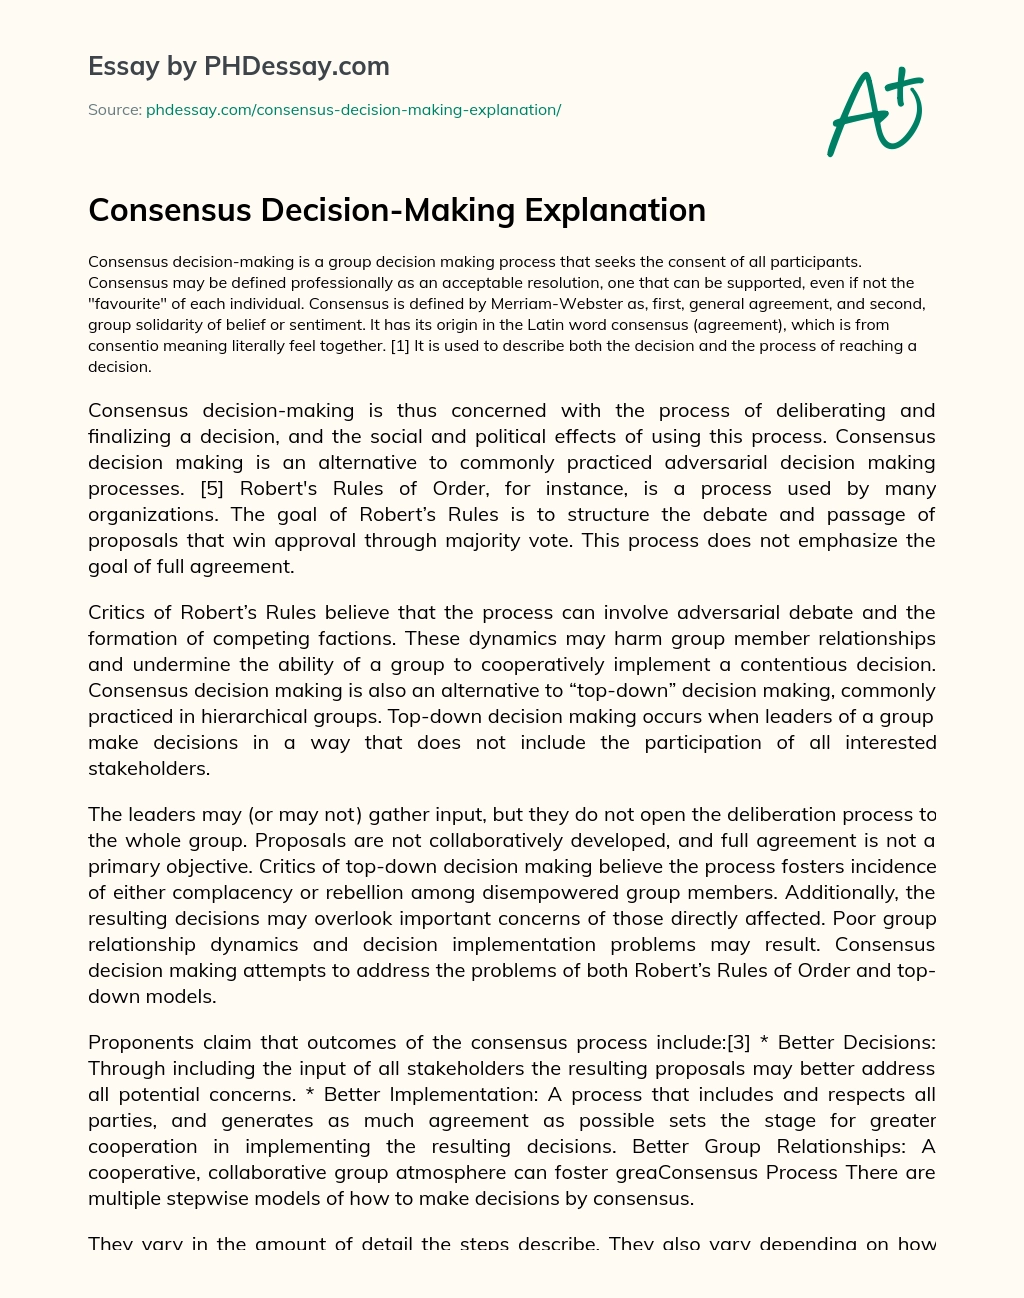 Consensus Decision-Making Explanation essay